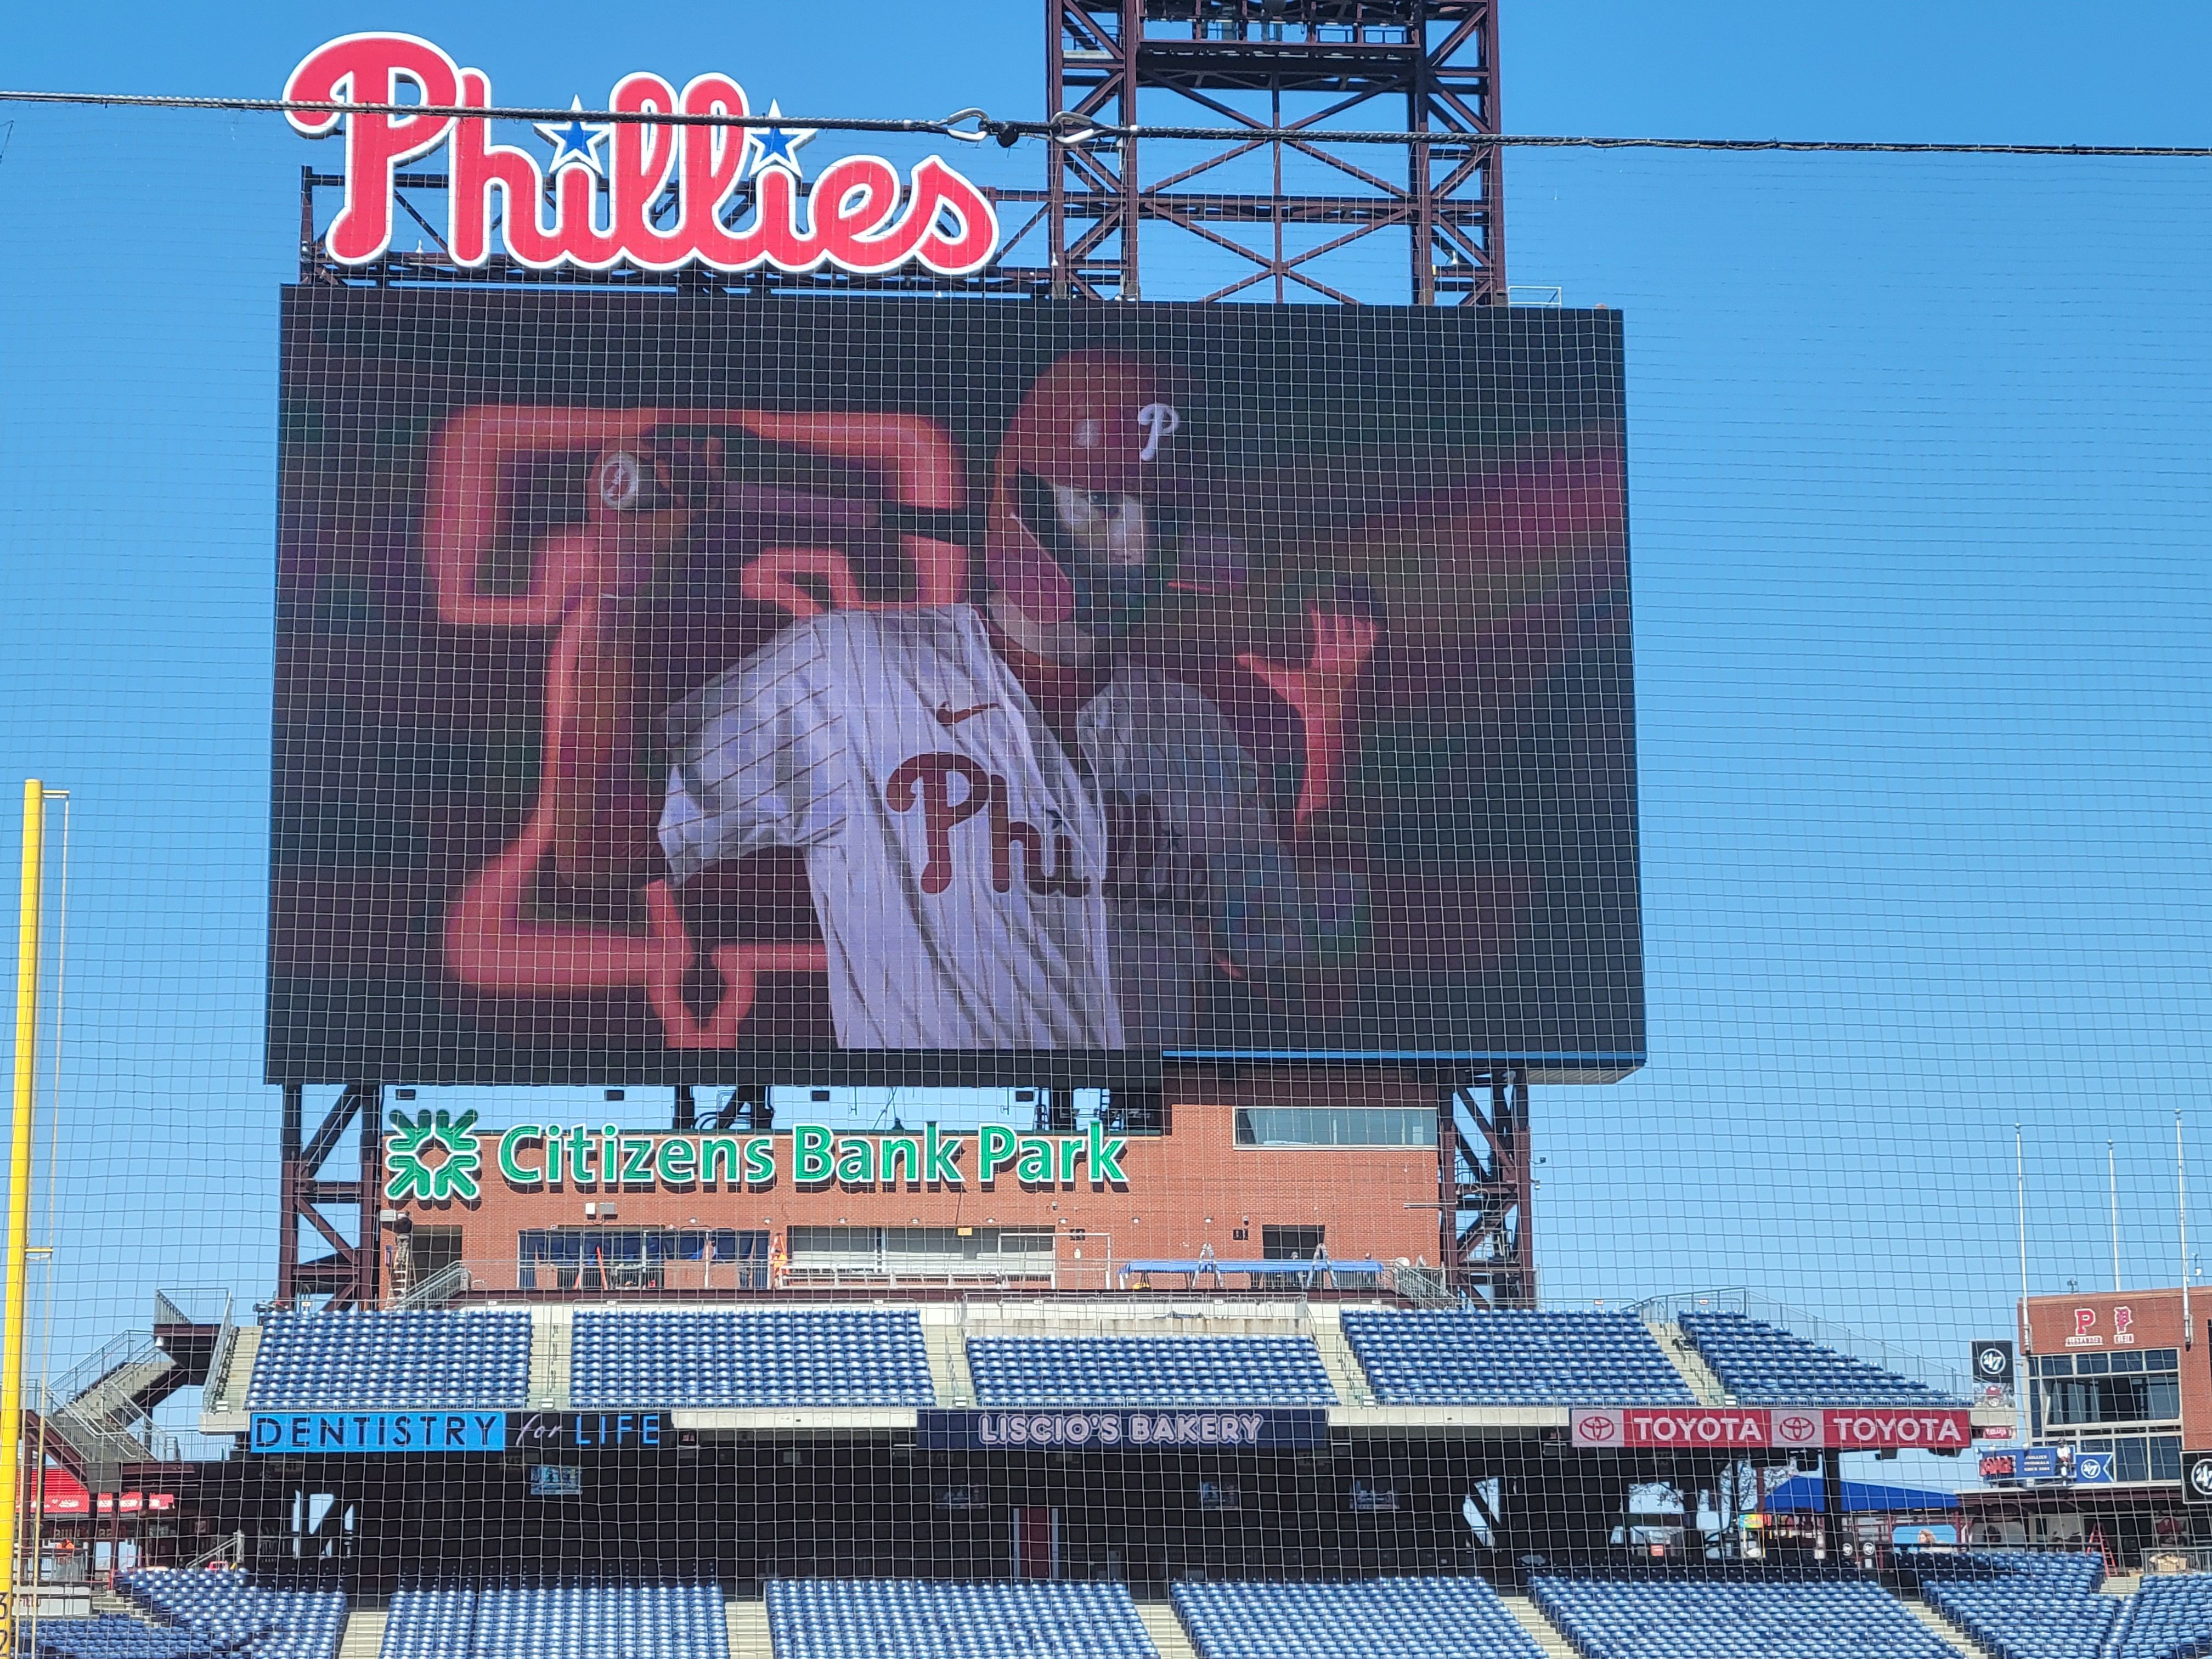 The Phillies' massive Phanavision scoreboard